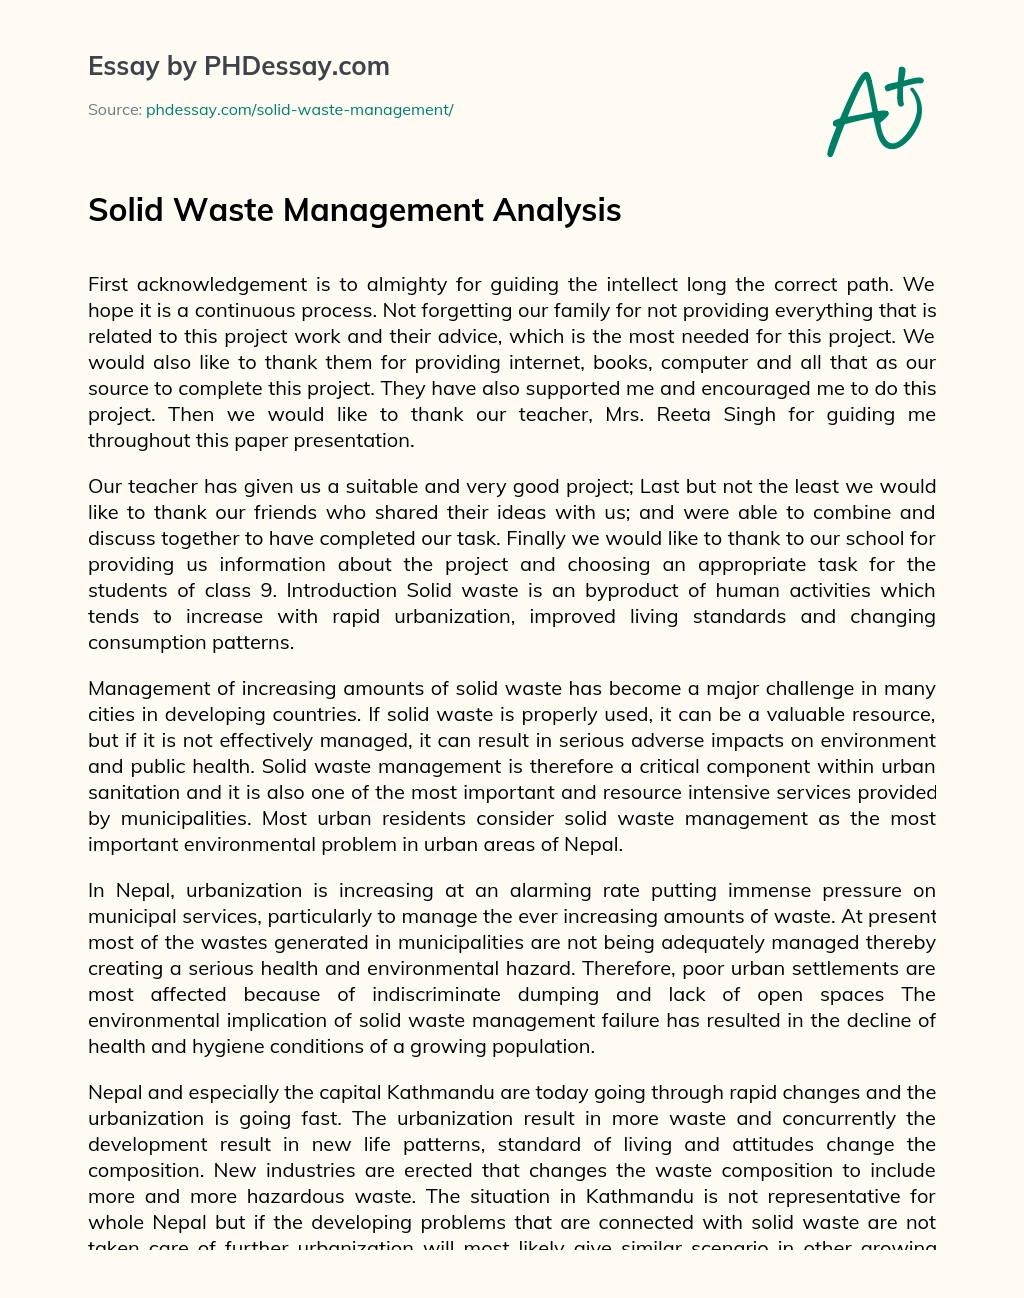 Solid Waste Management Analysis essay